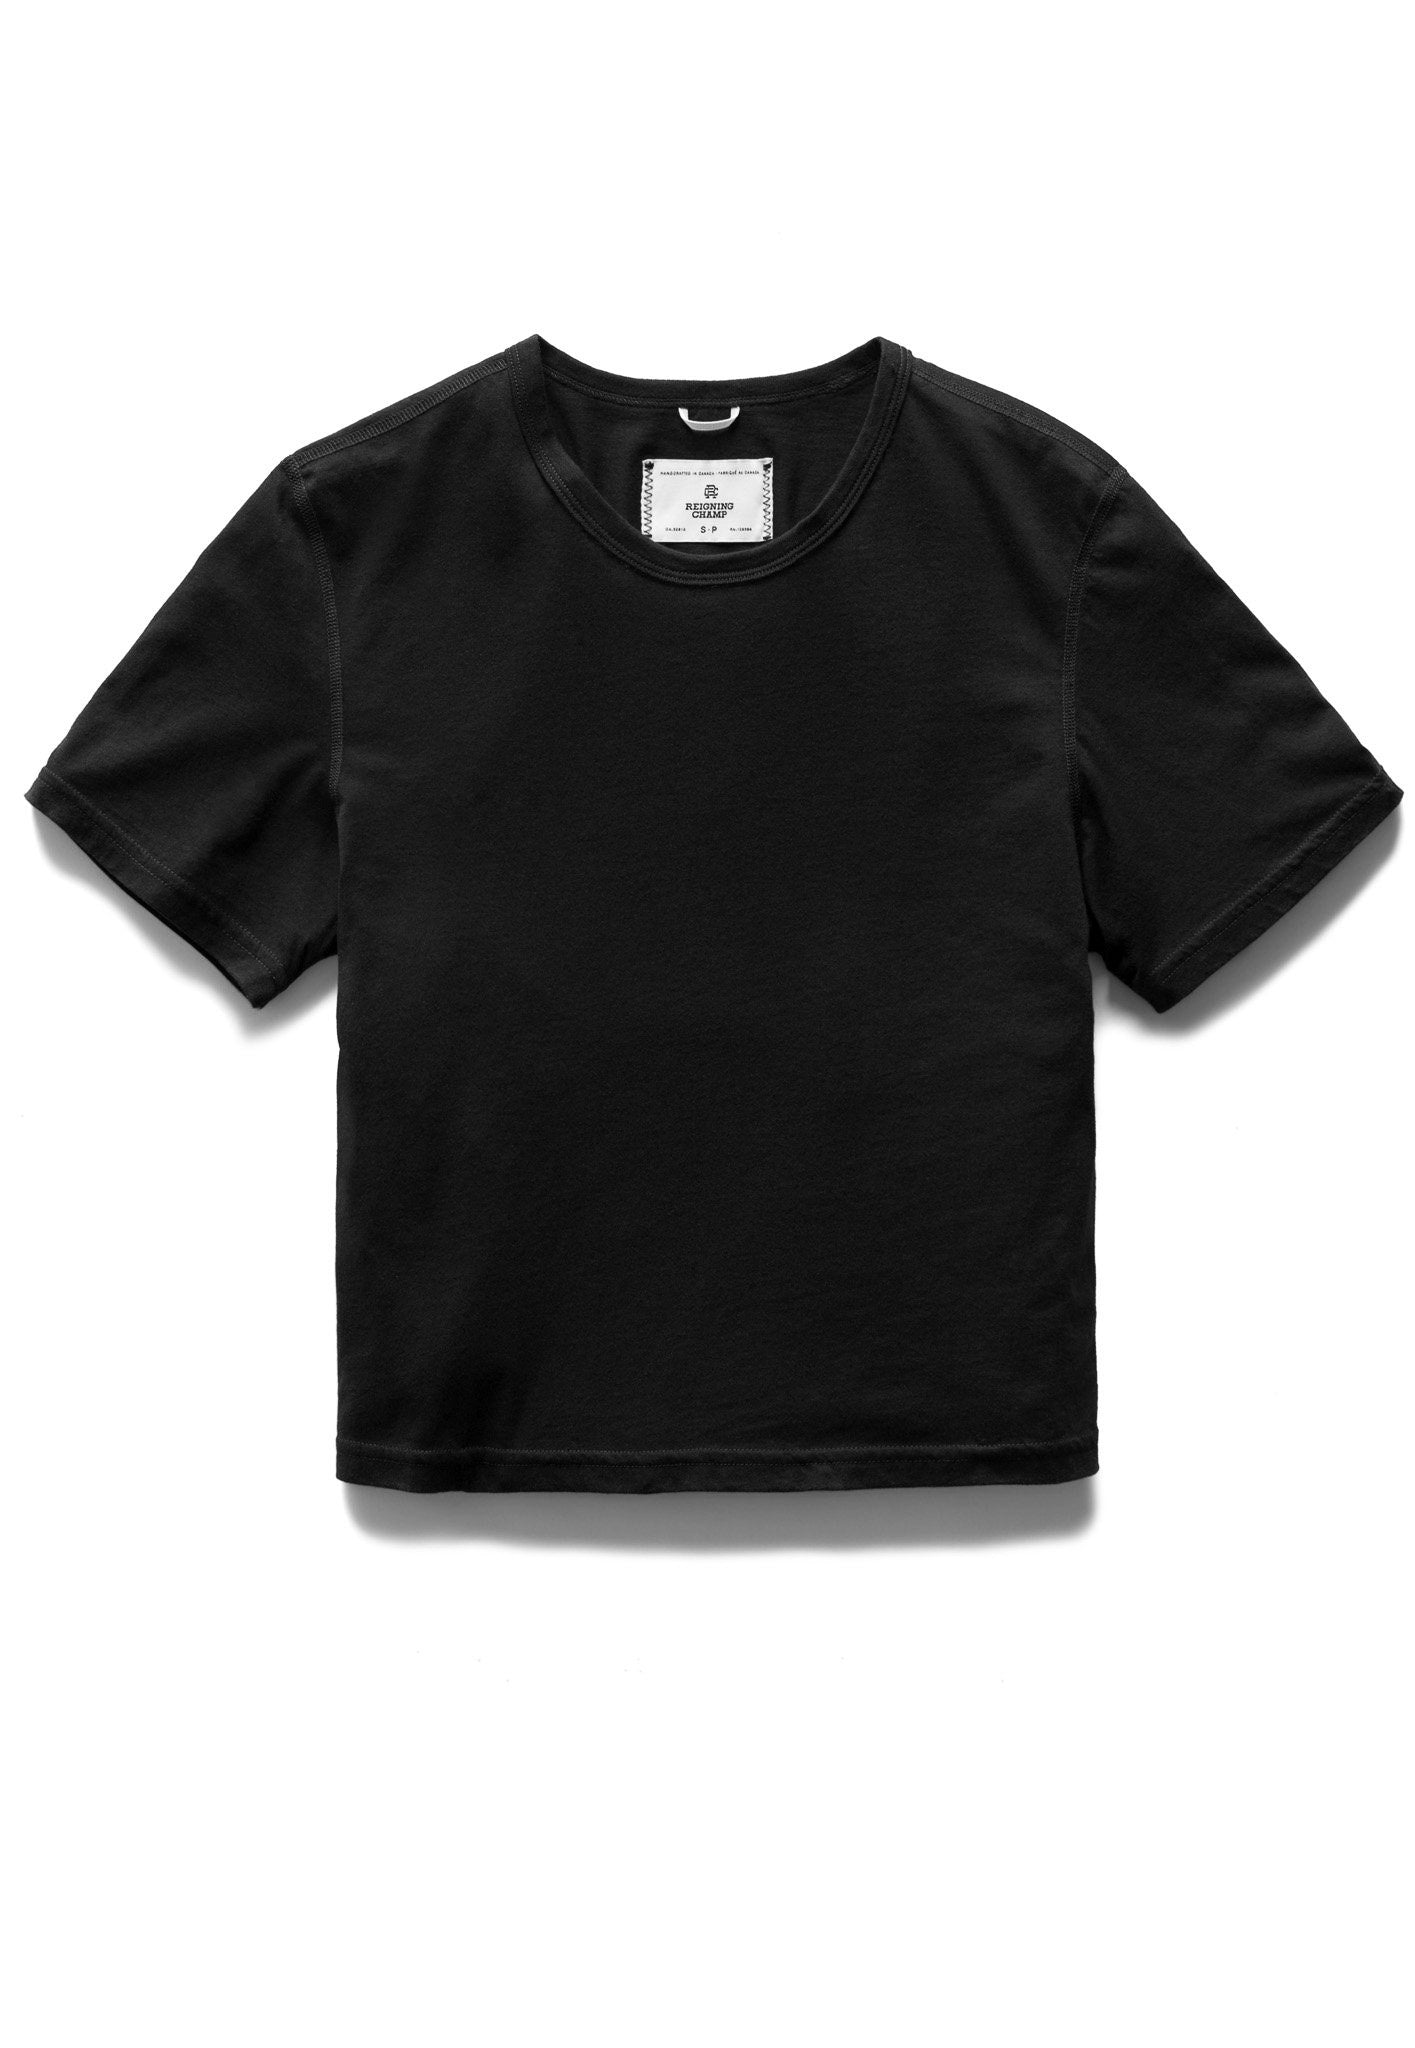 Box Fit Plain T-Shirt